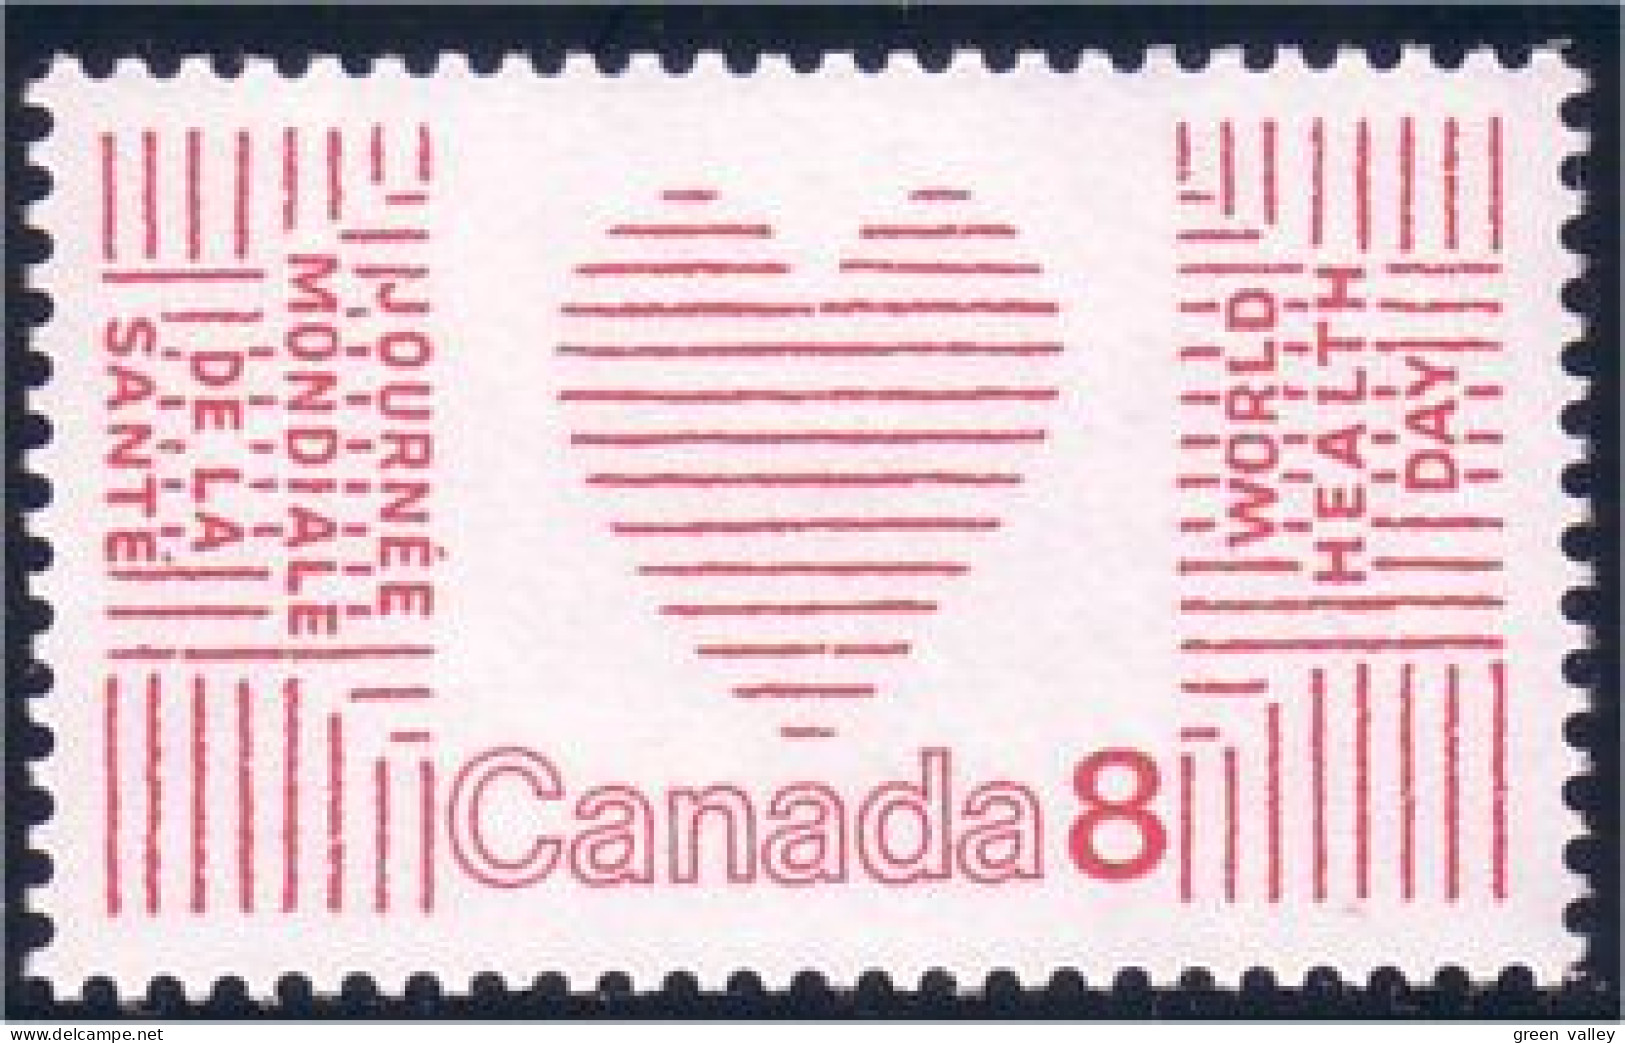 Canada Coeur Heart MNH ** Neuf SC (C05-60ia) - Neufs